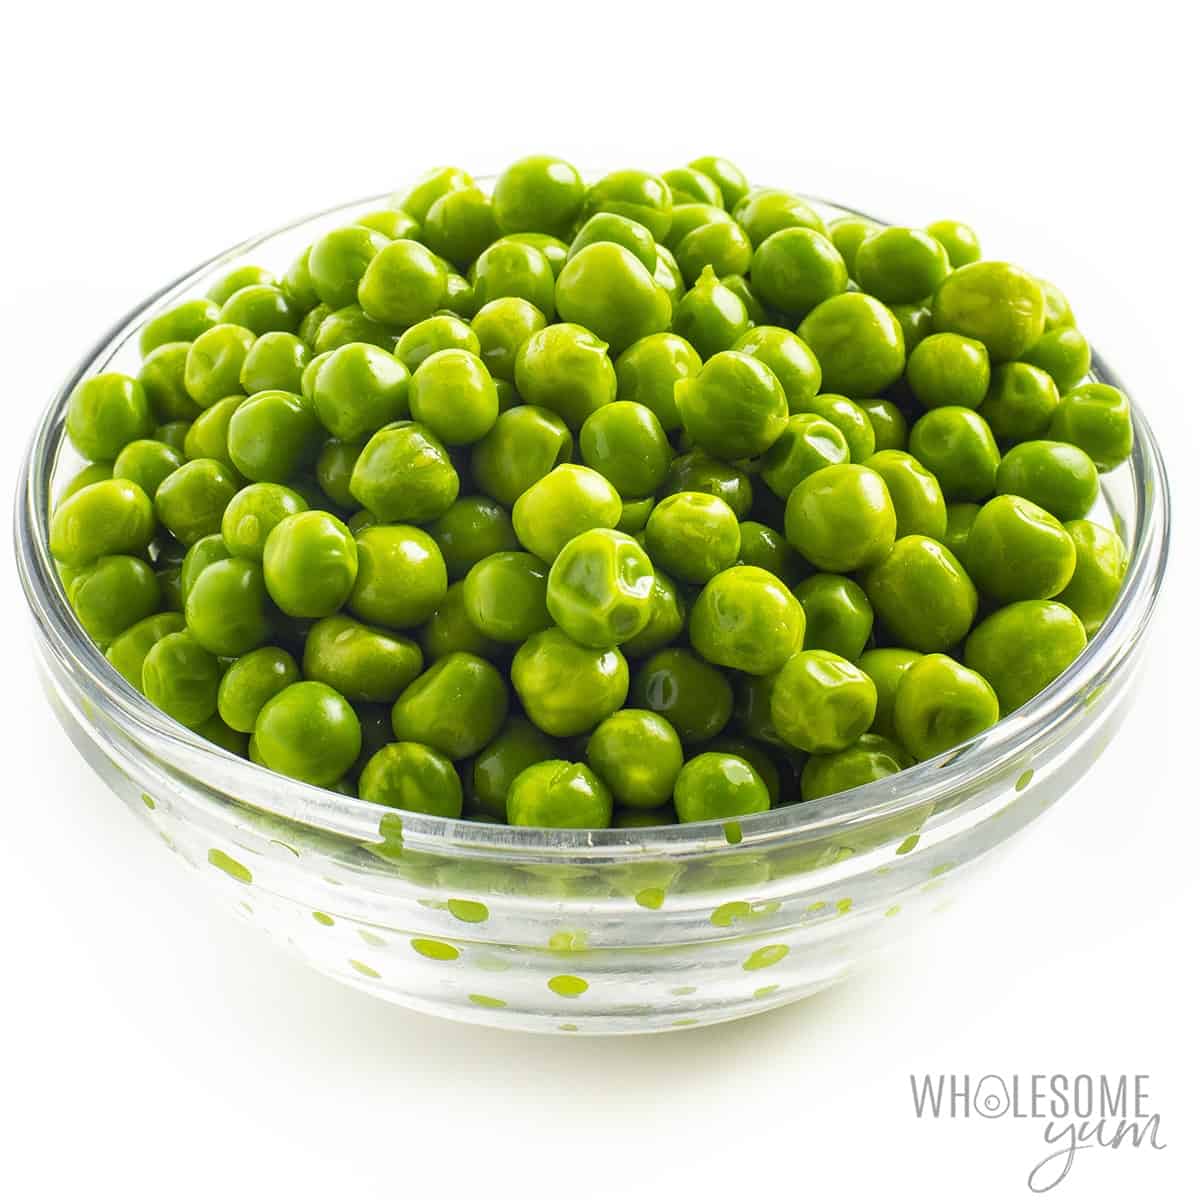 Are peas keto? This bowl of green peas is not very keto friendly.